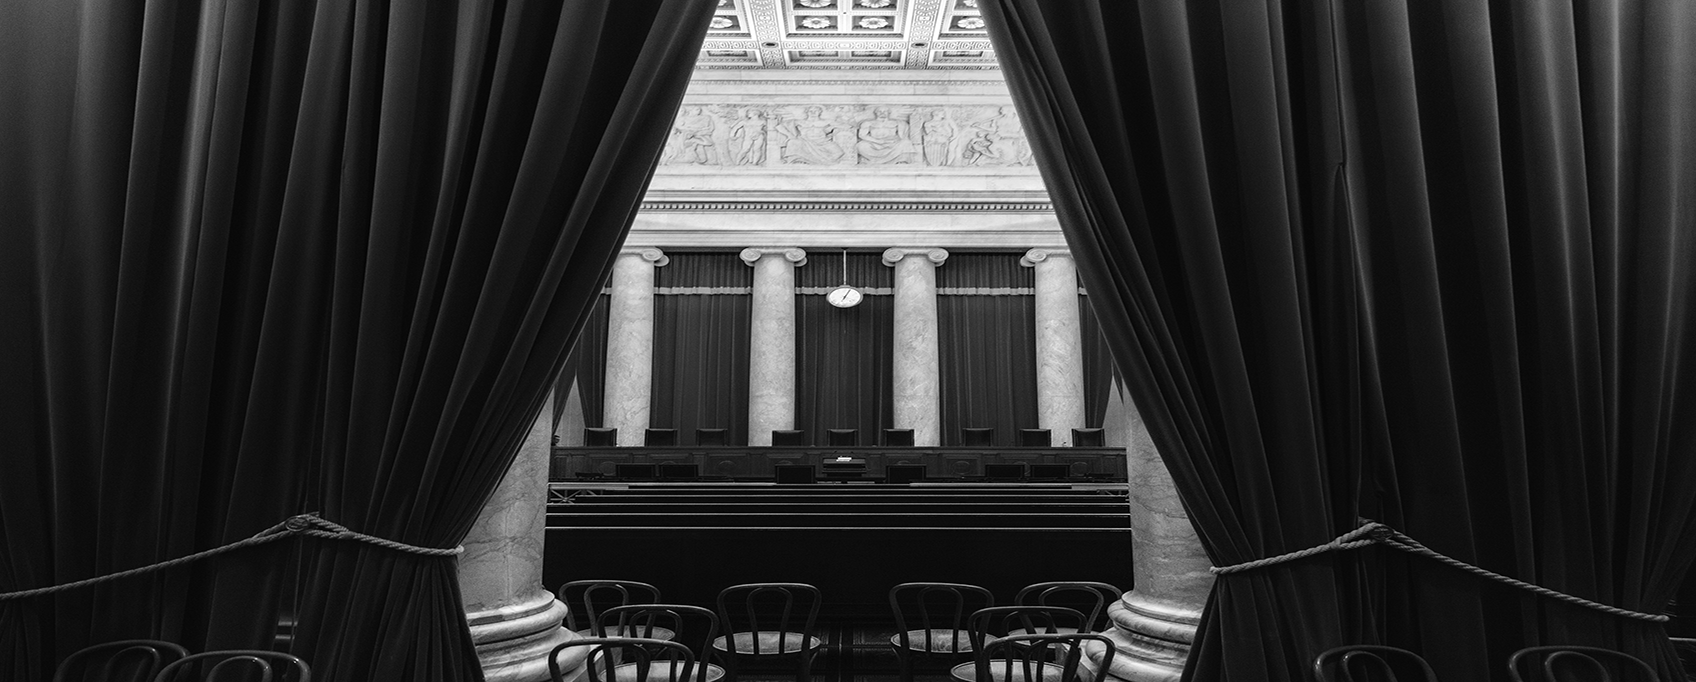 Supreme court chambers